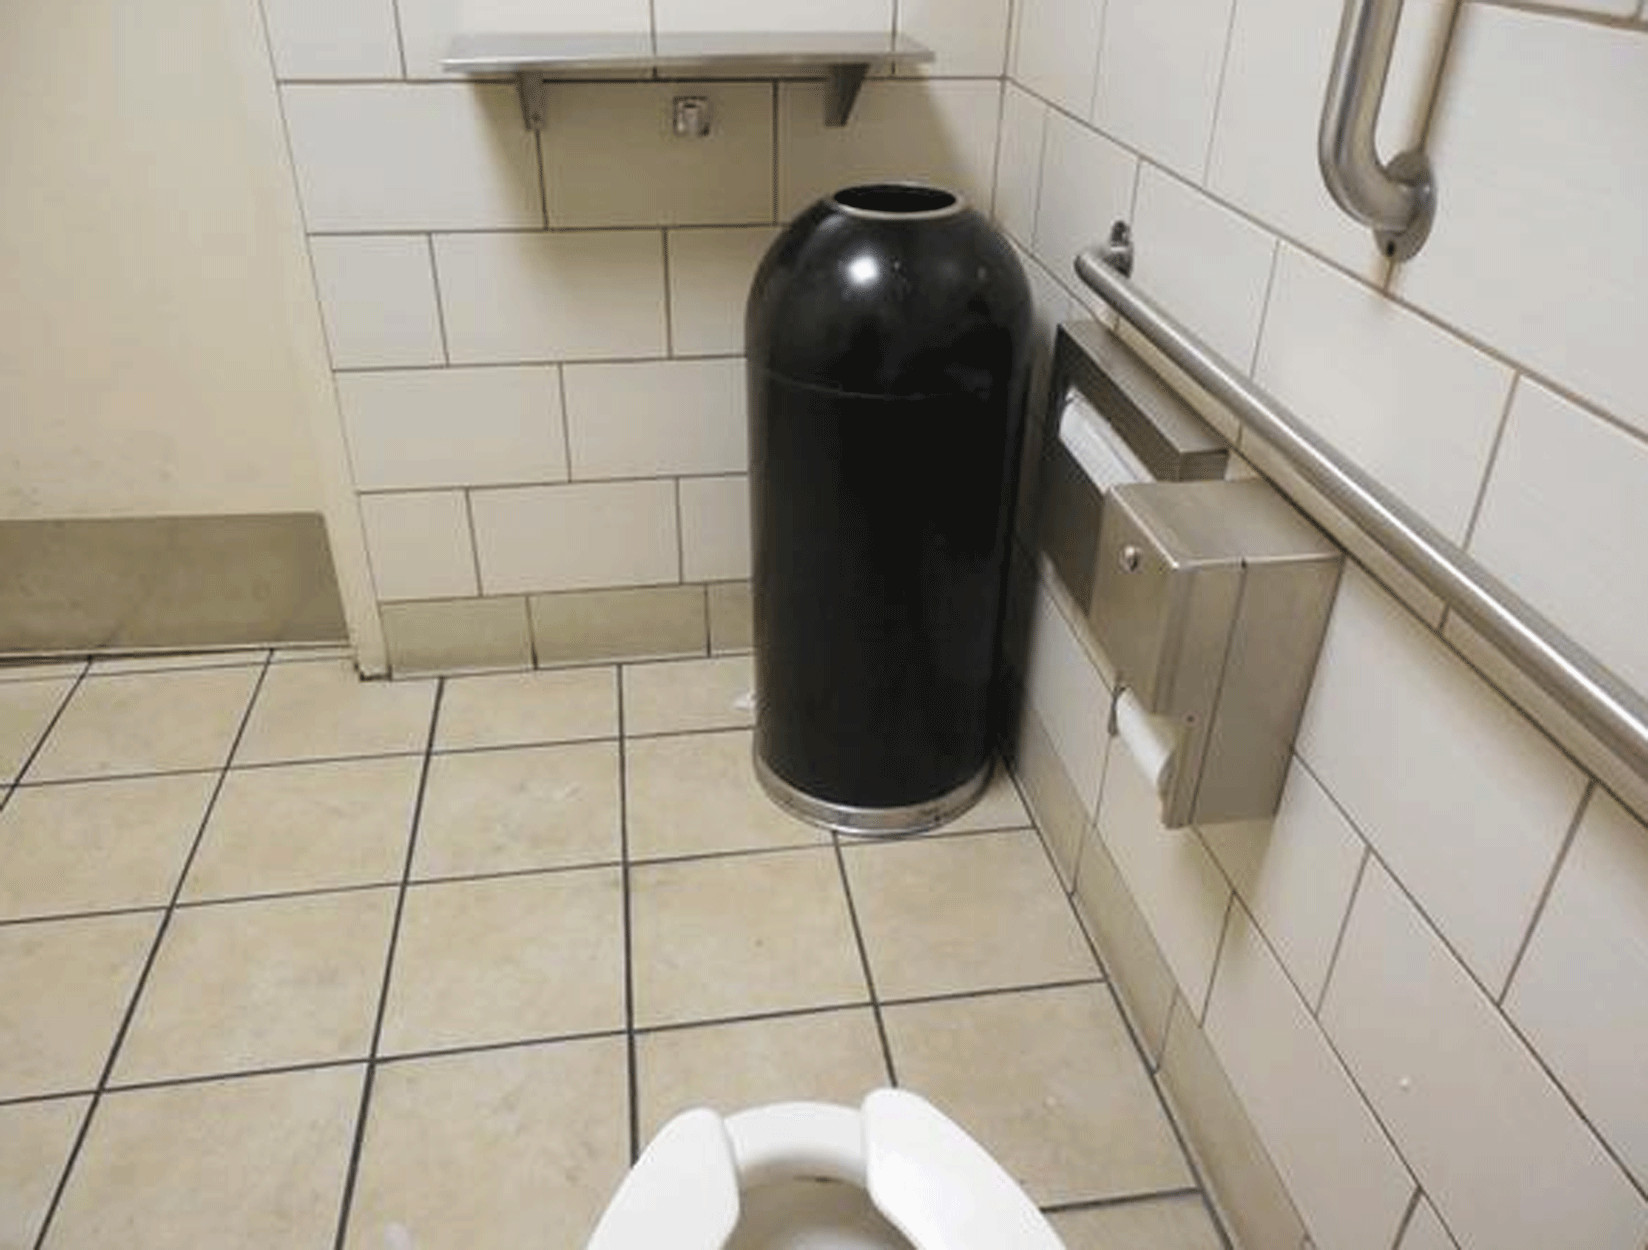 Best ideas about Hidden Cam Bathroom
. Save or Pin Woman Finds Hidden Camera in Starbucks Bathroom in Brea Now.